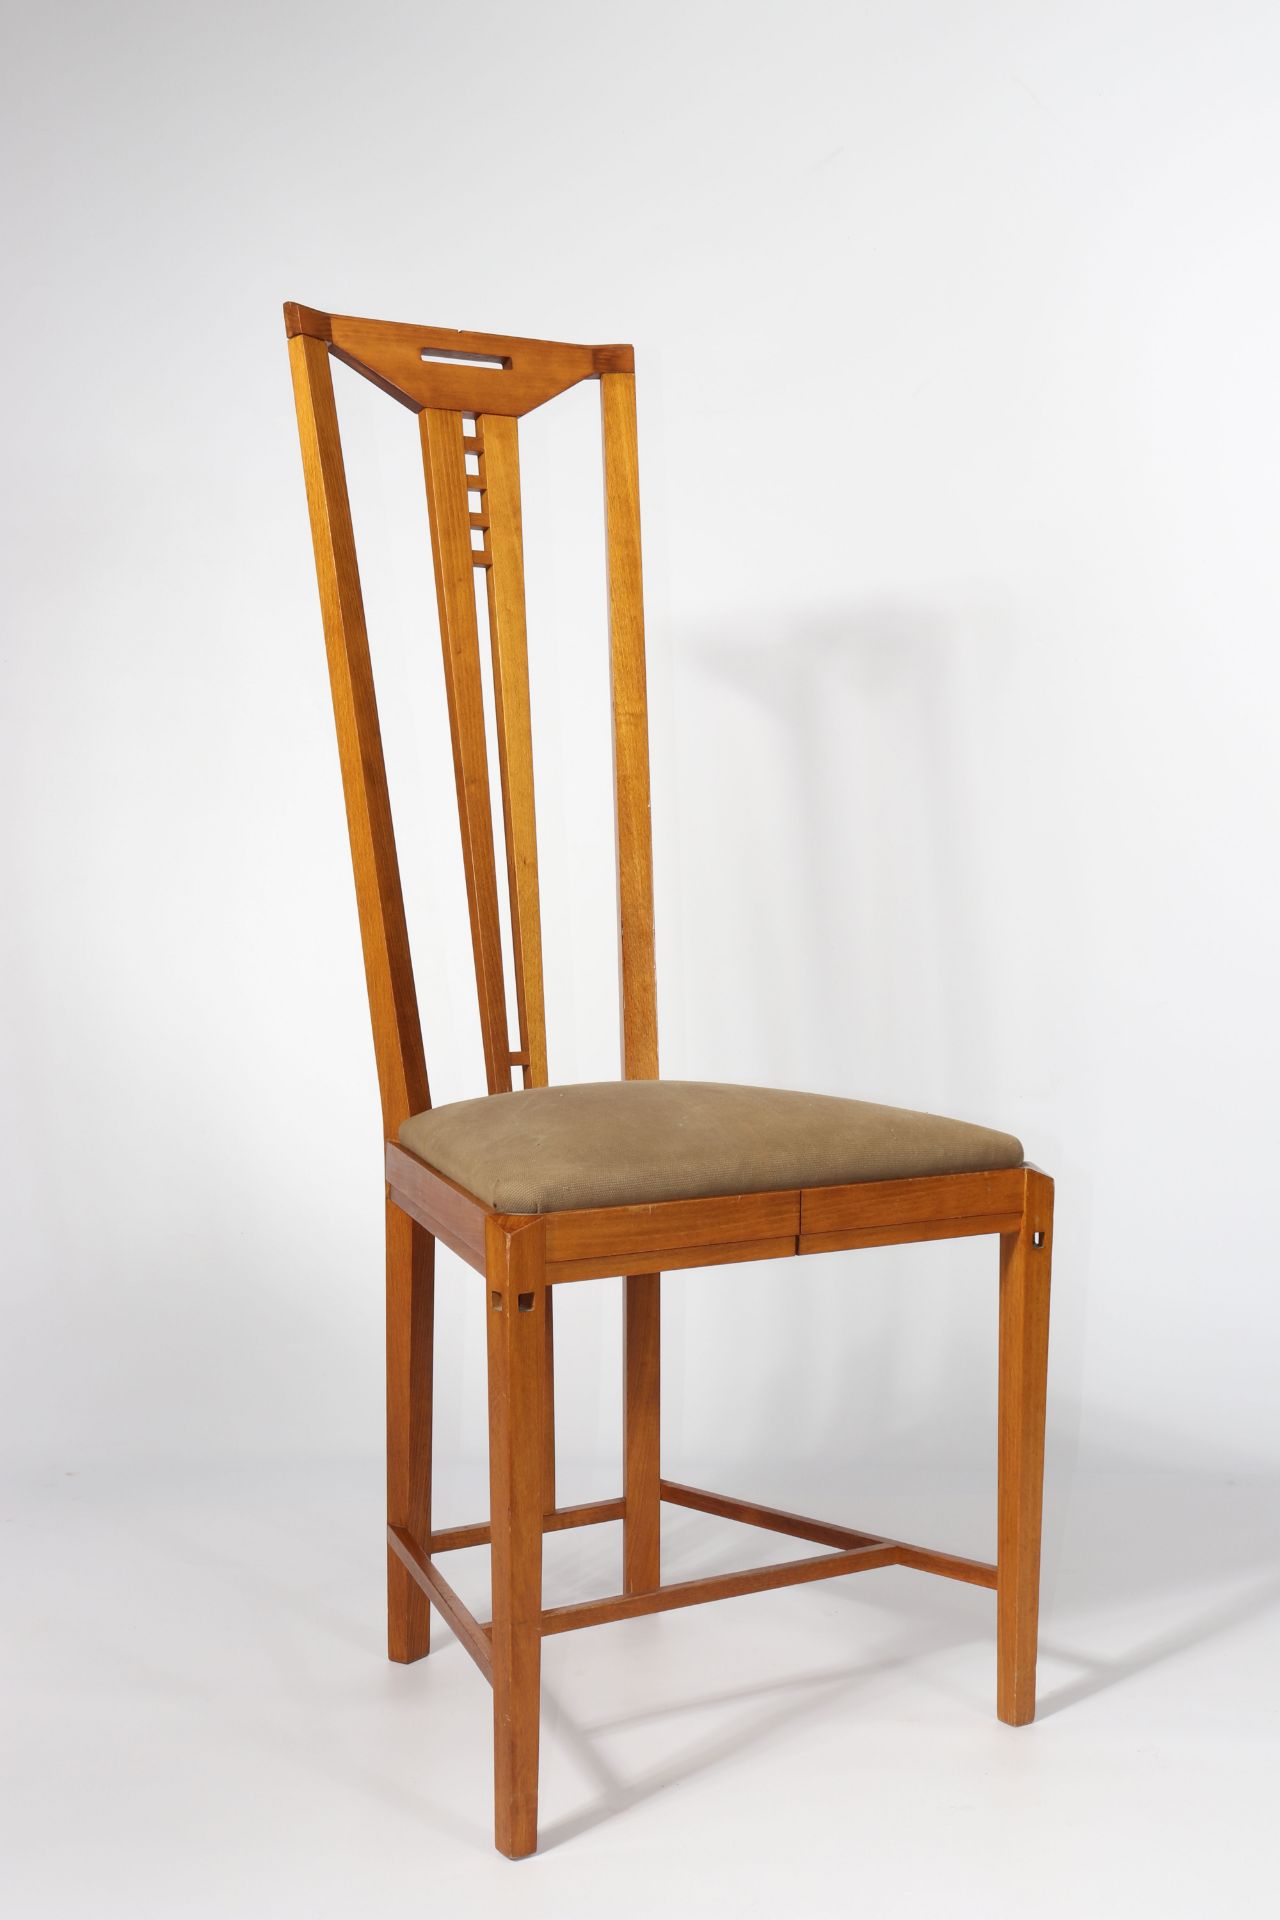 Chair around 1900